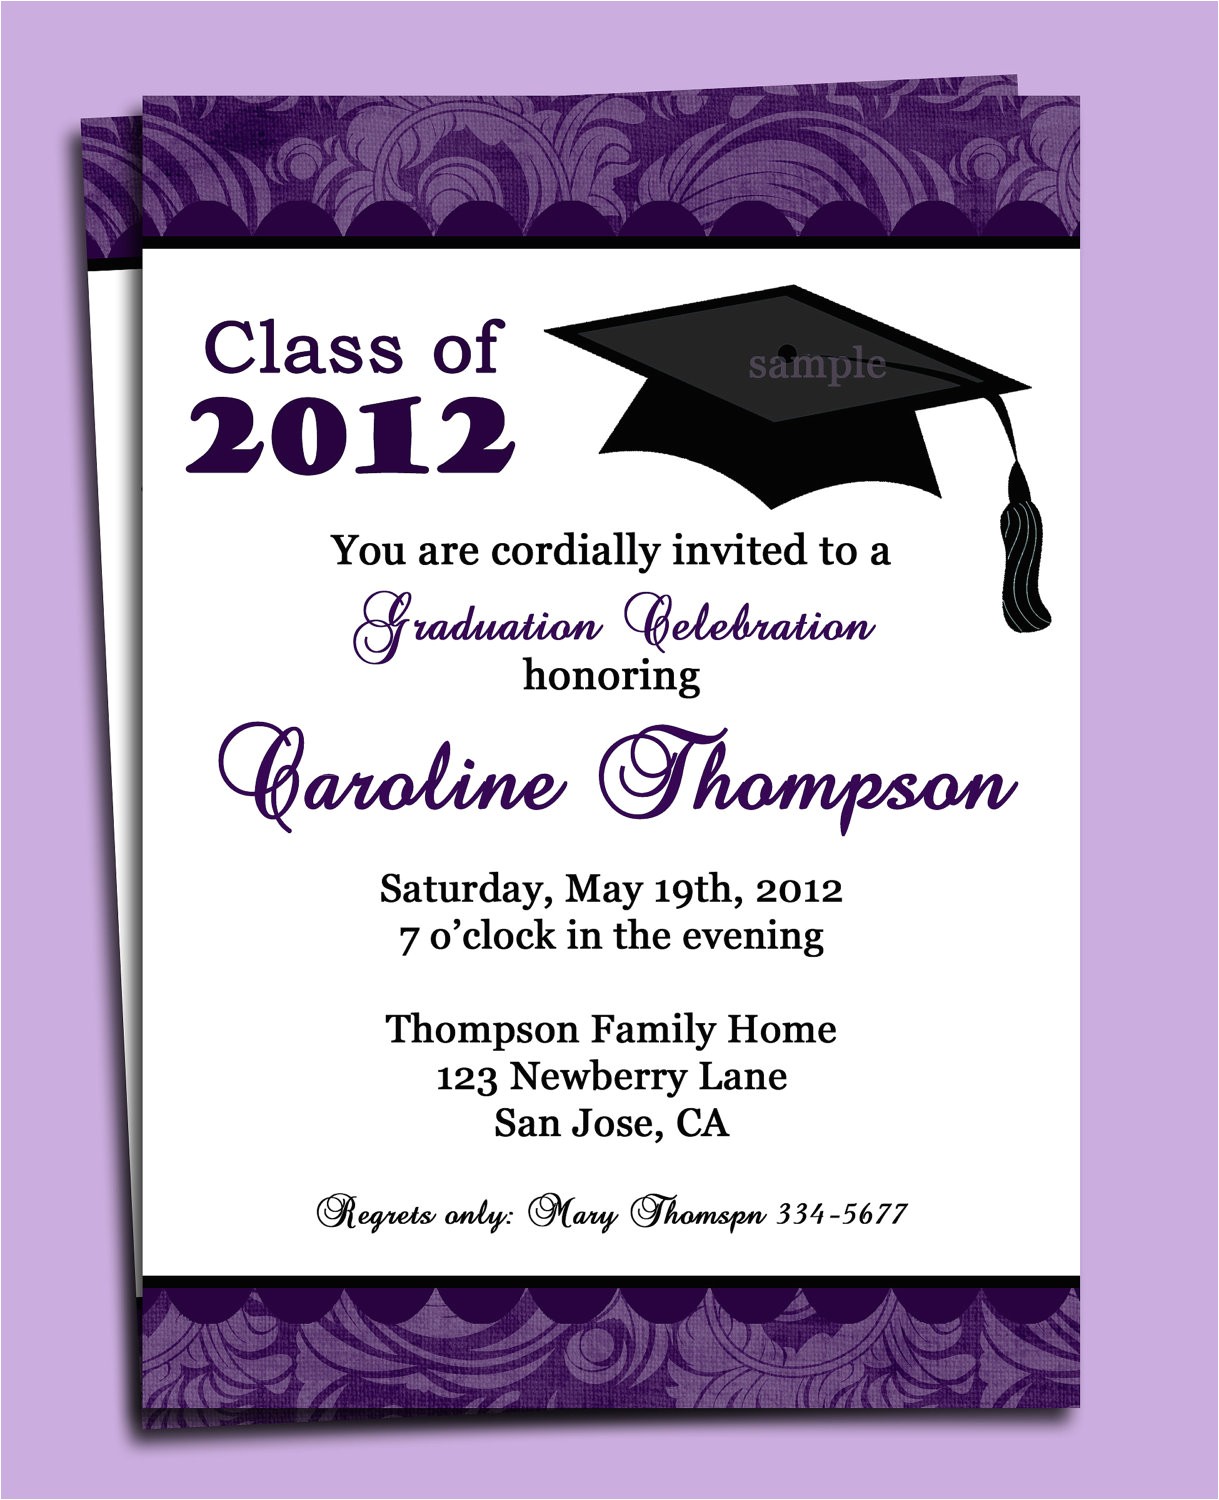 Graduation Invitation Writing Stunning Graduation Party Invitation Card Sample Almost